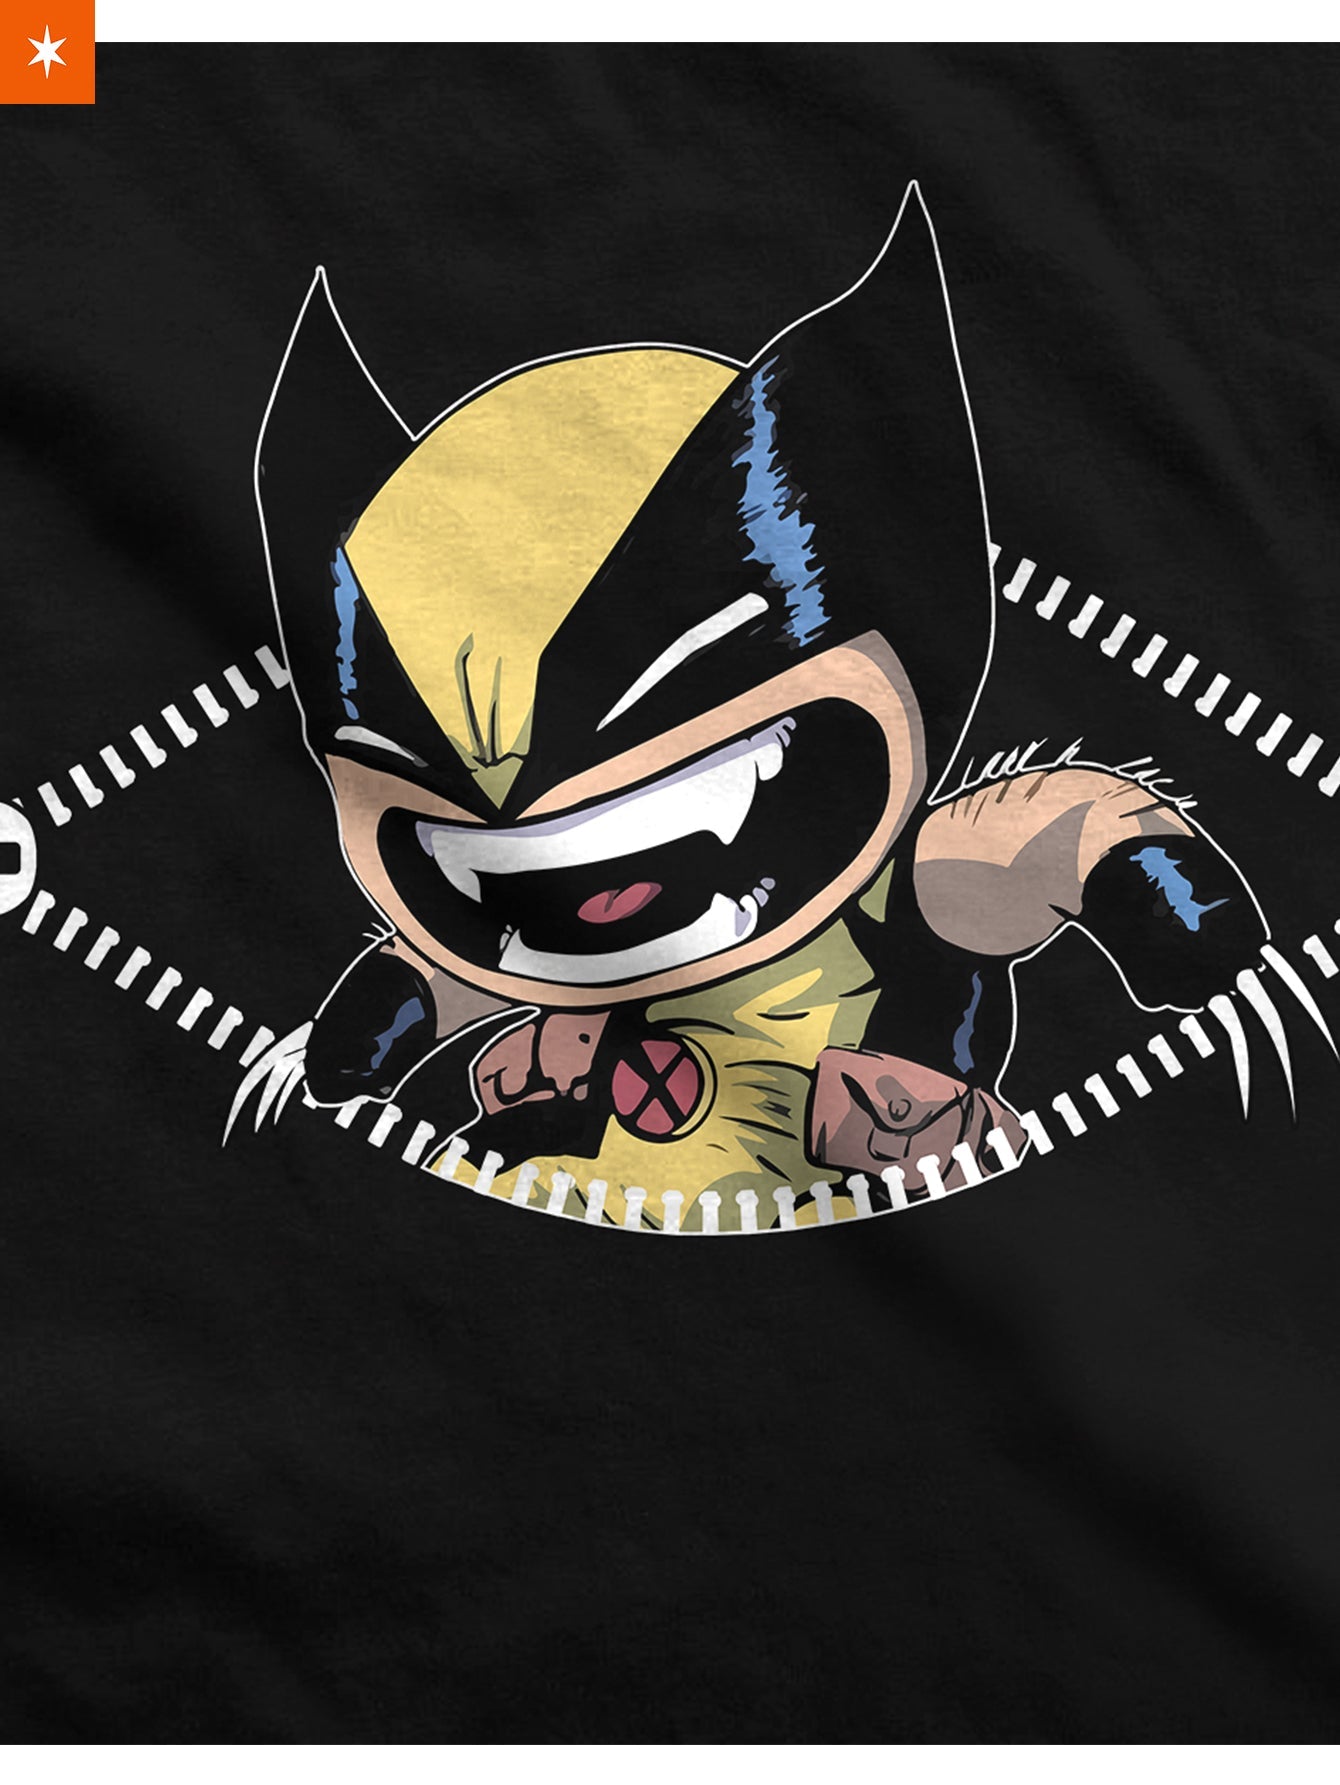 Fandomaniax - Baby Wolverine Peeking Maternity T-Shirt